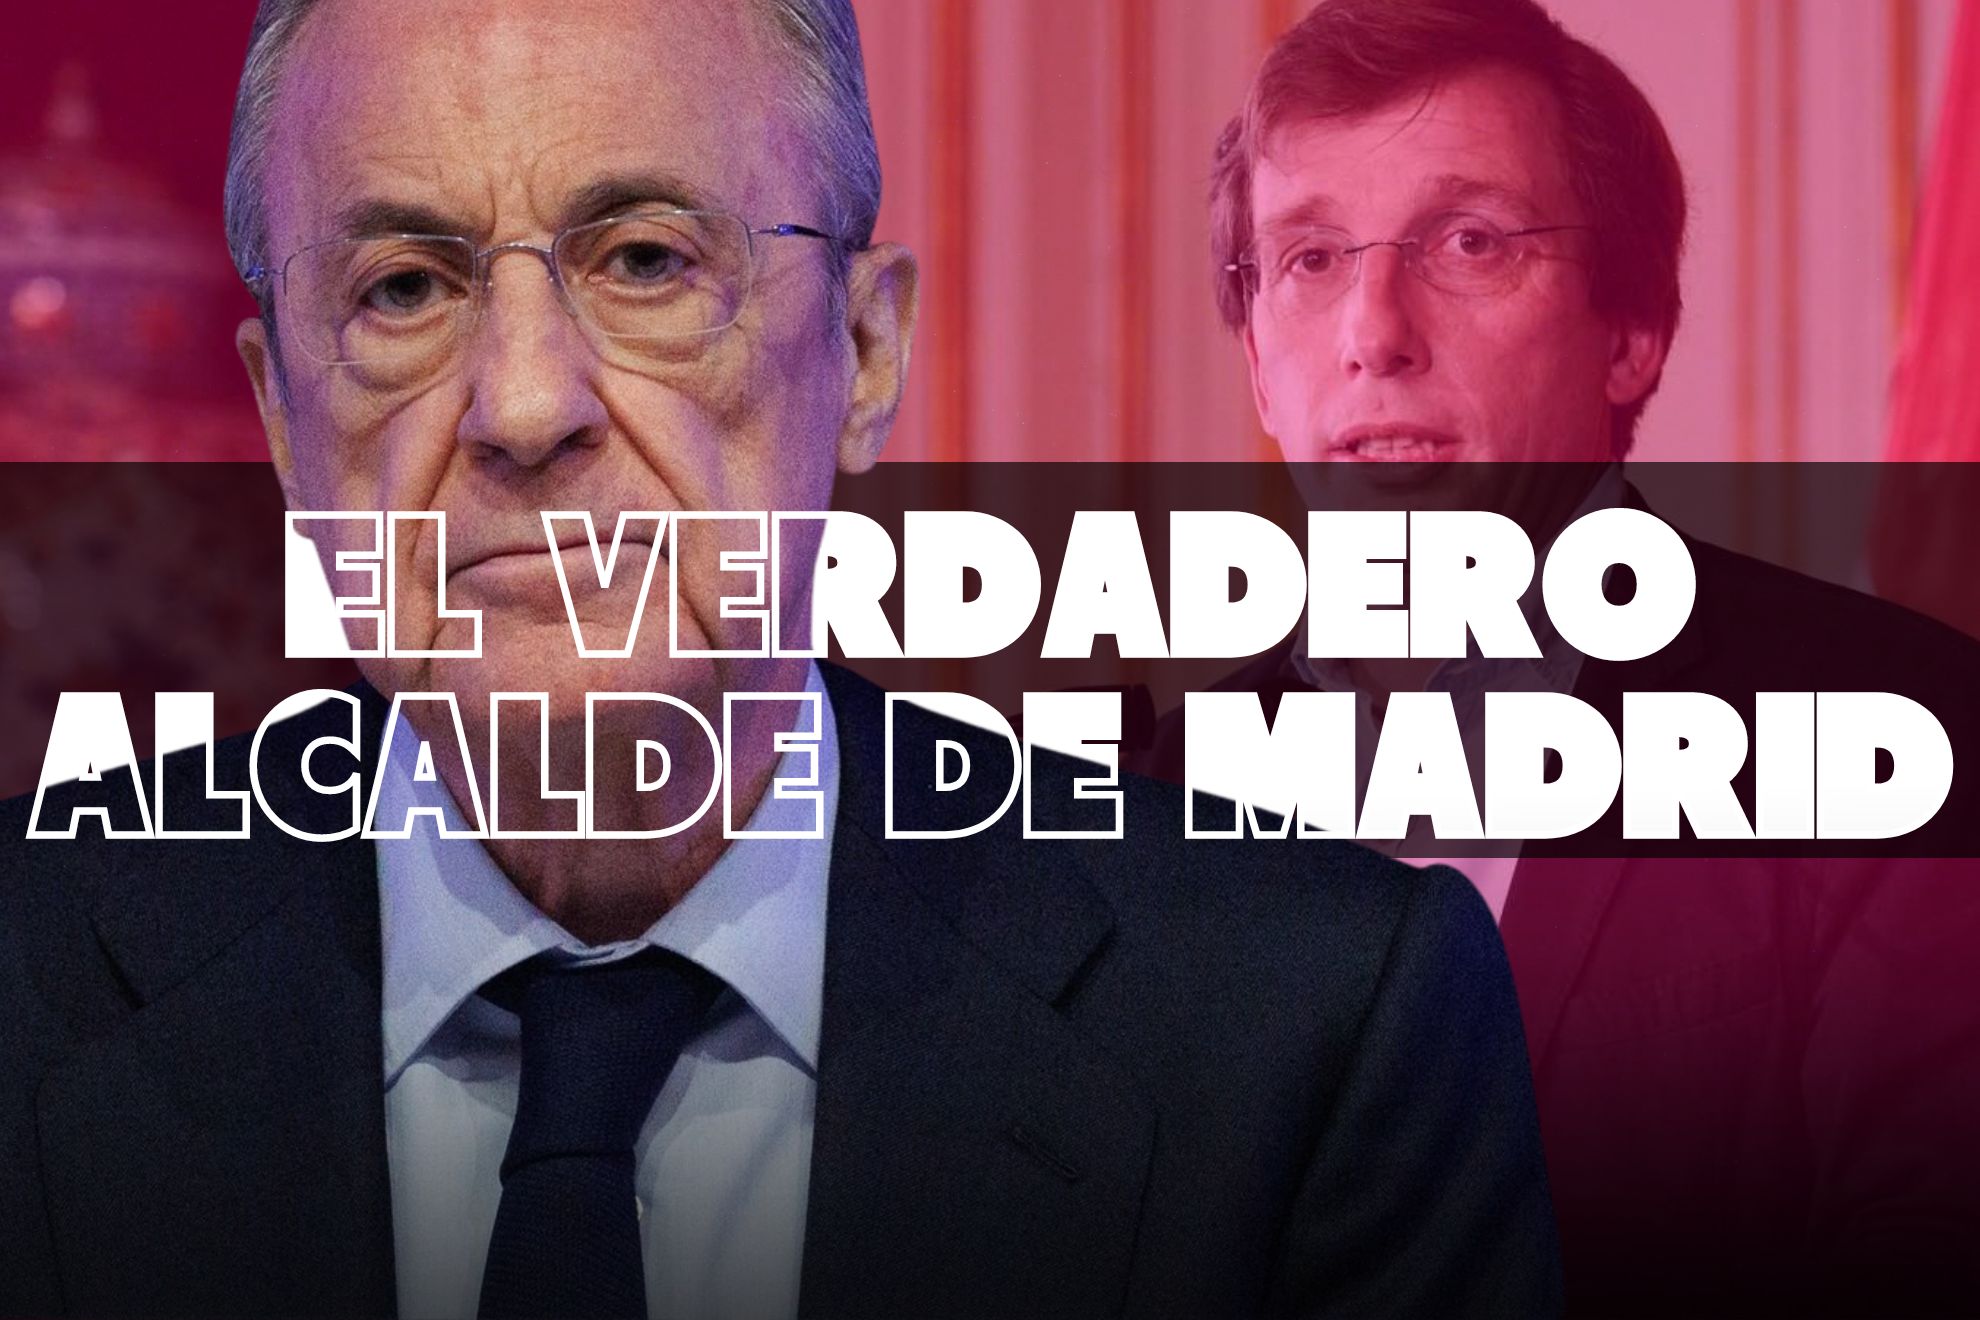 “El verdadero alcalde de Madrid es Florentino Pérez”